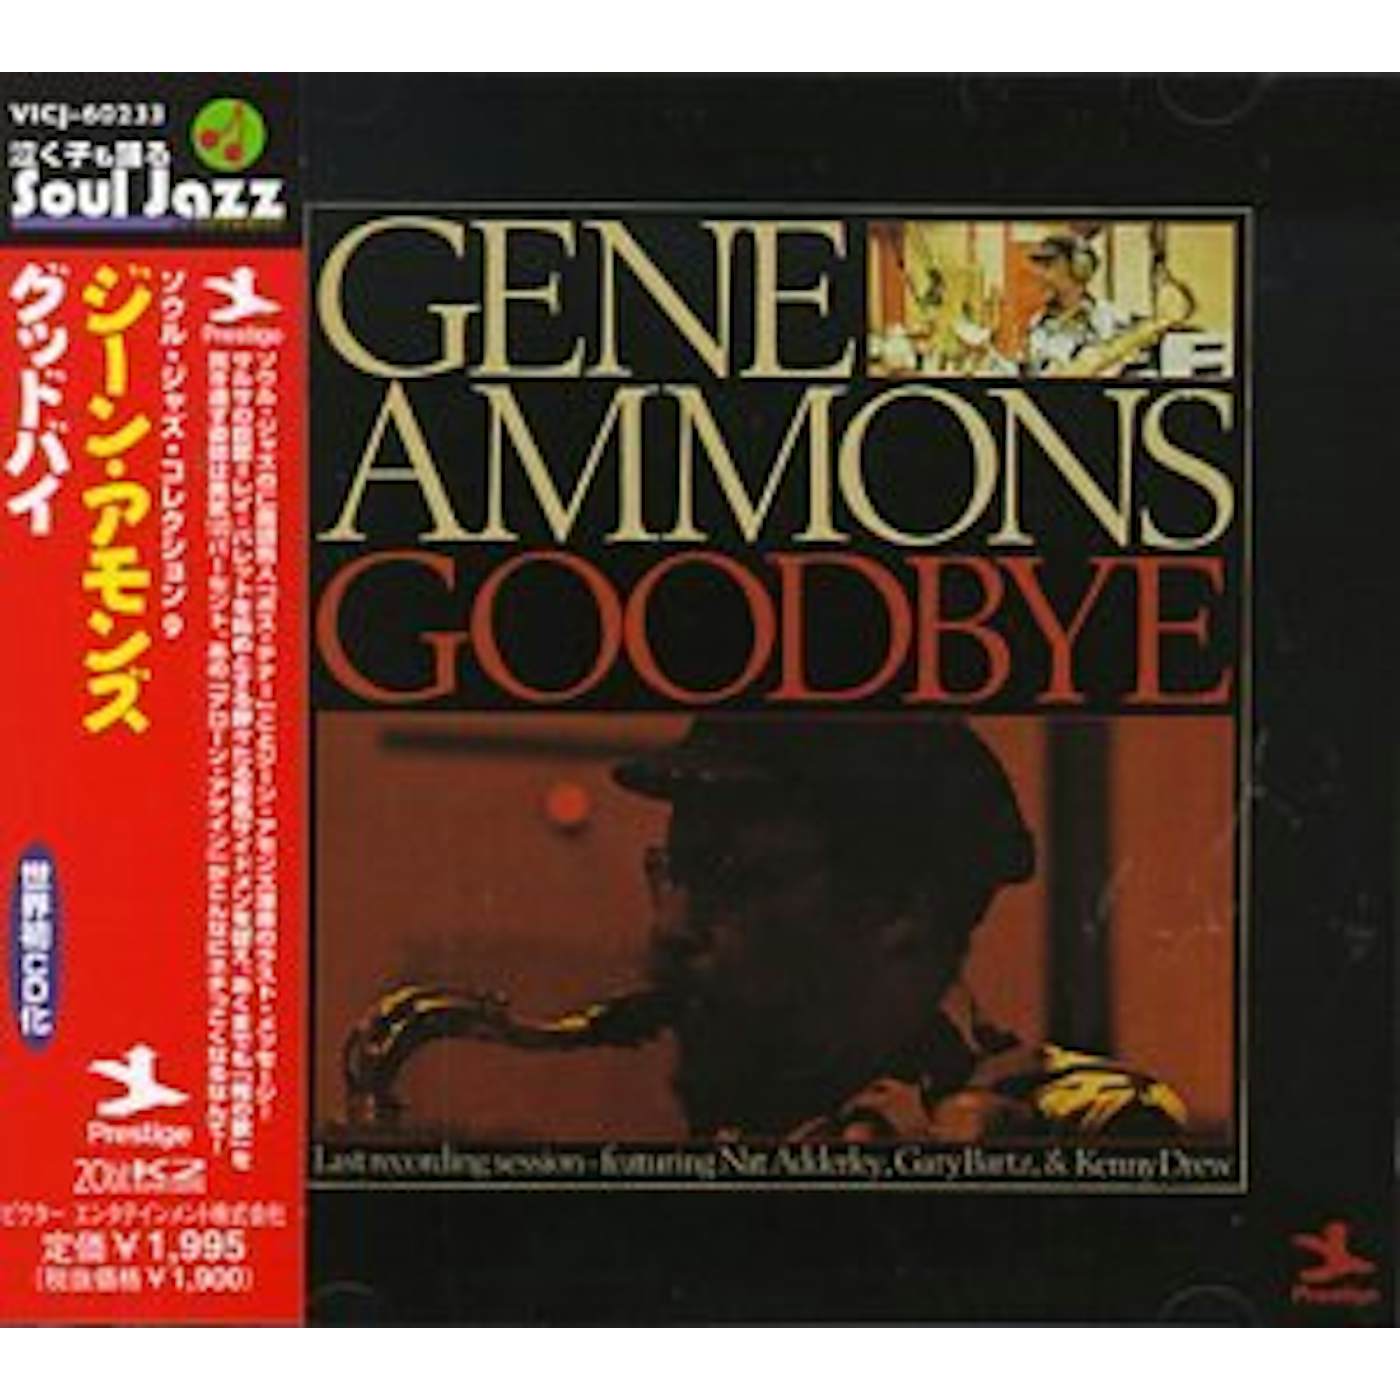 Gene Ammons GOODBYE CD